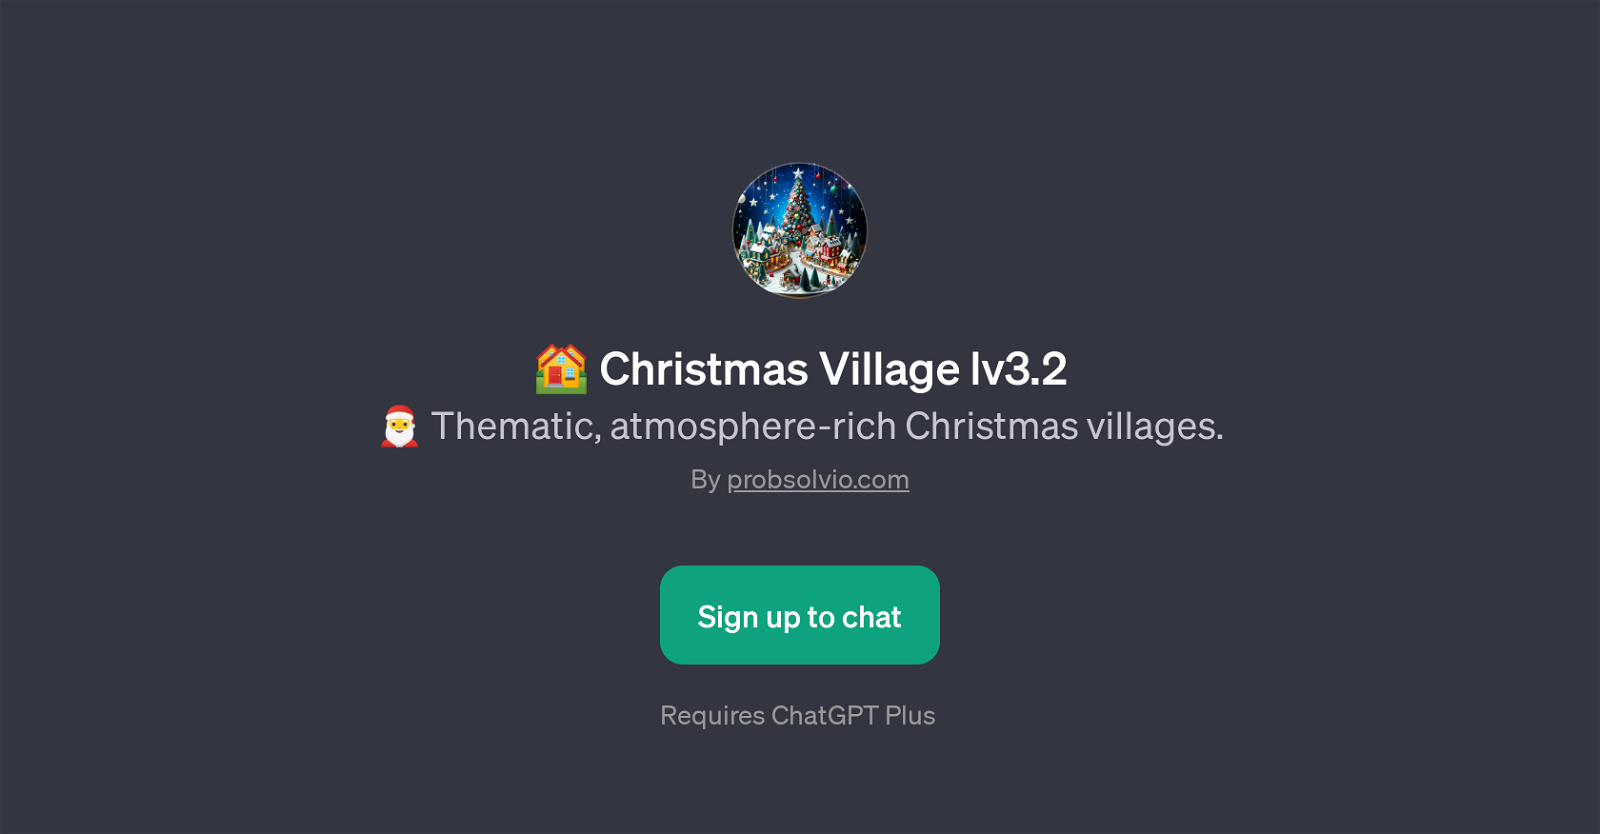 Christmas Village lv3.2 website